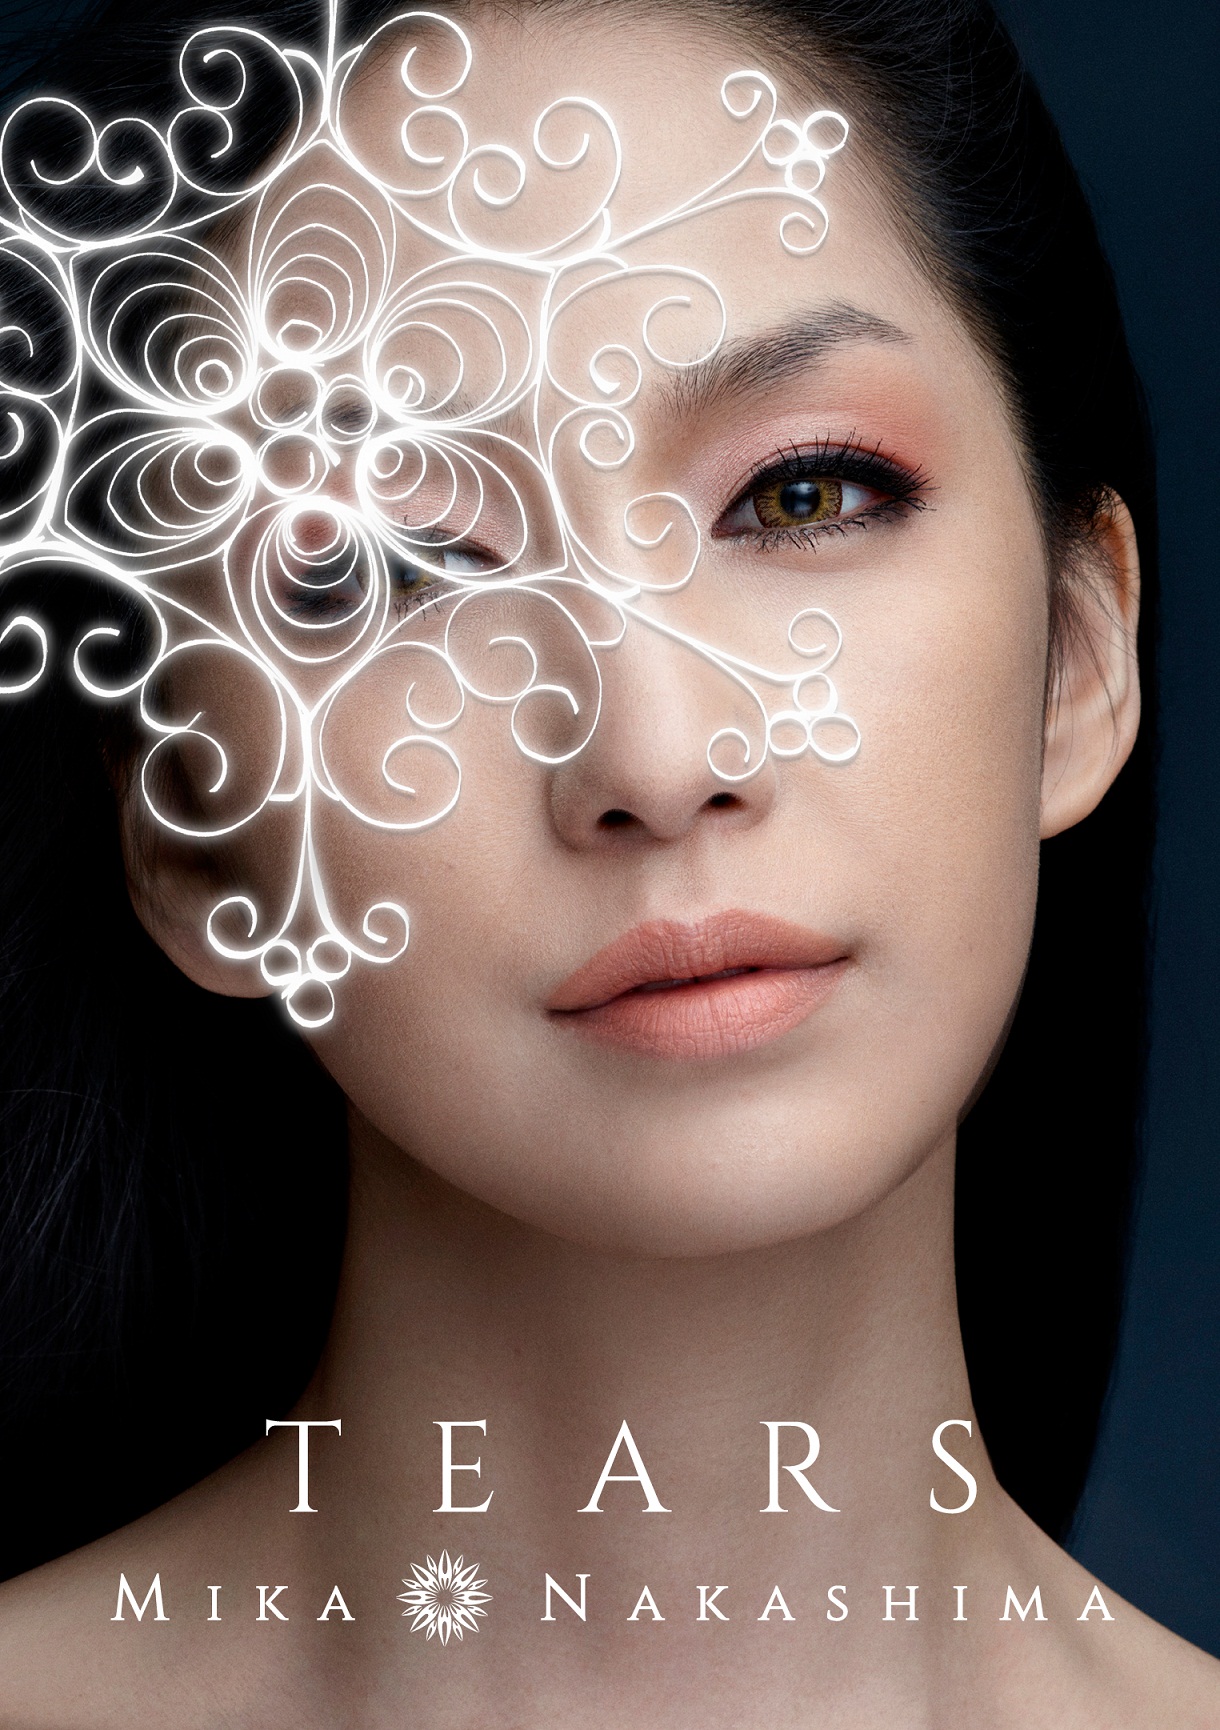 20151201.01 Mika Nakashima - Tears cover 2.jpg